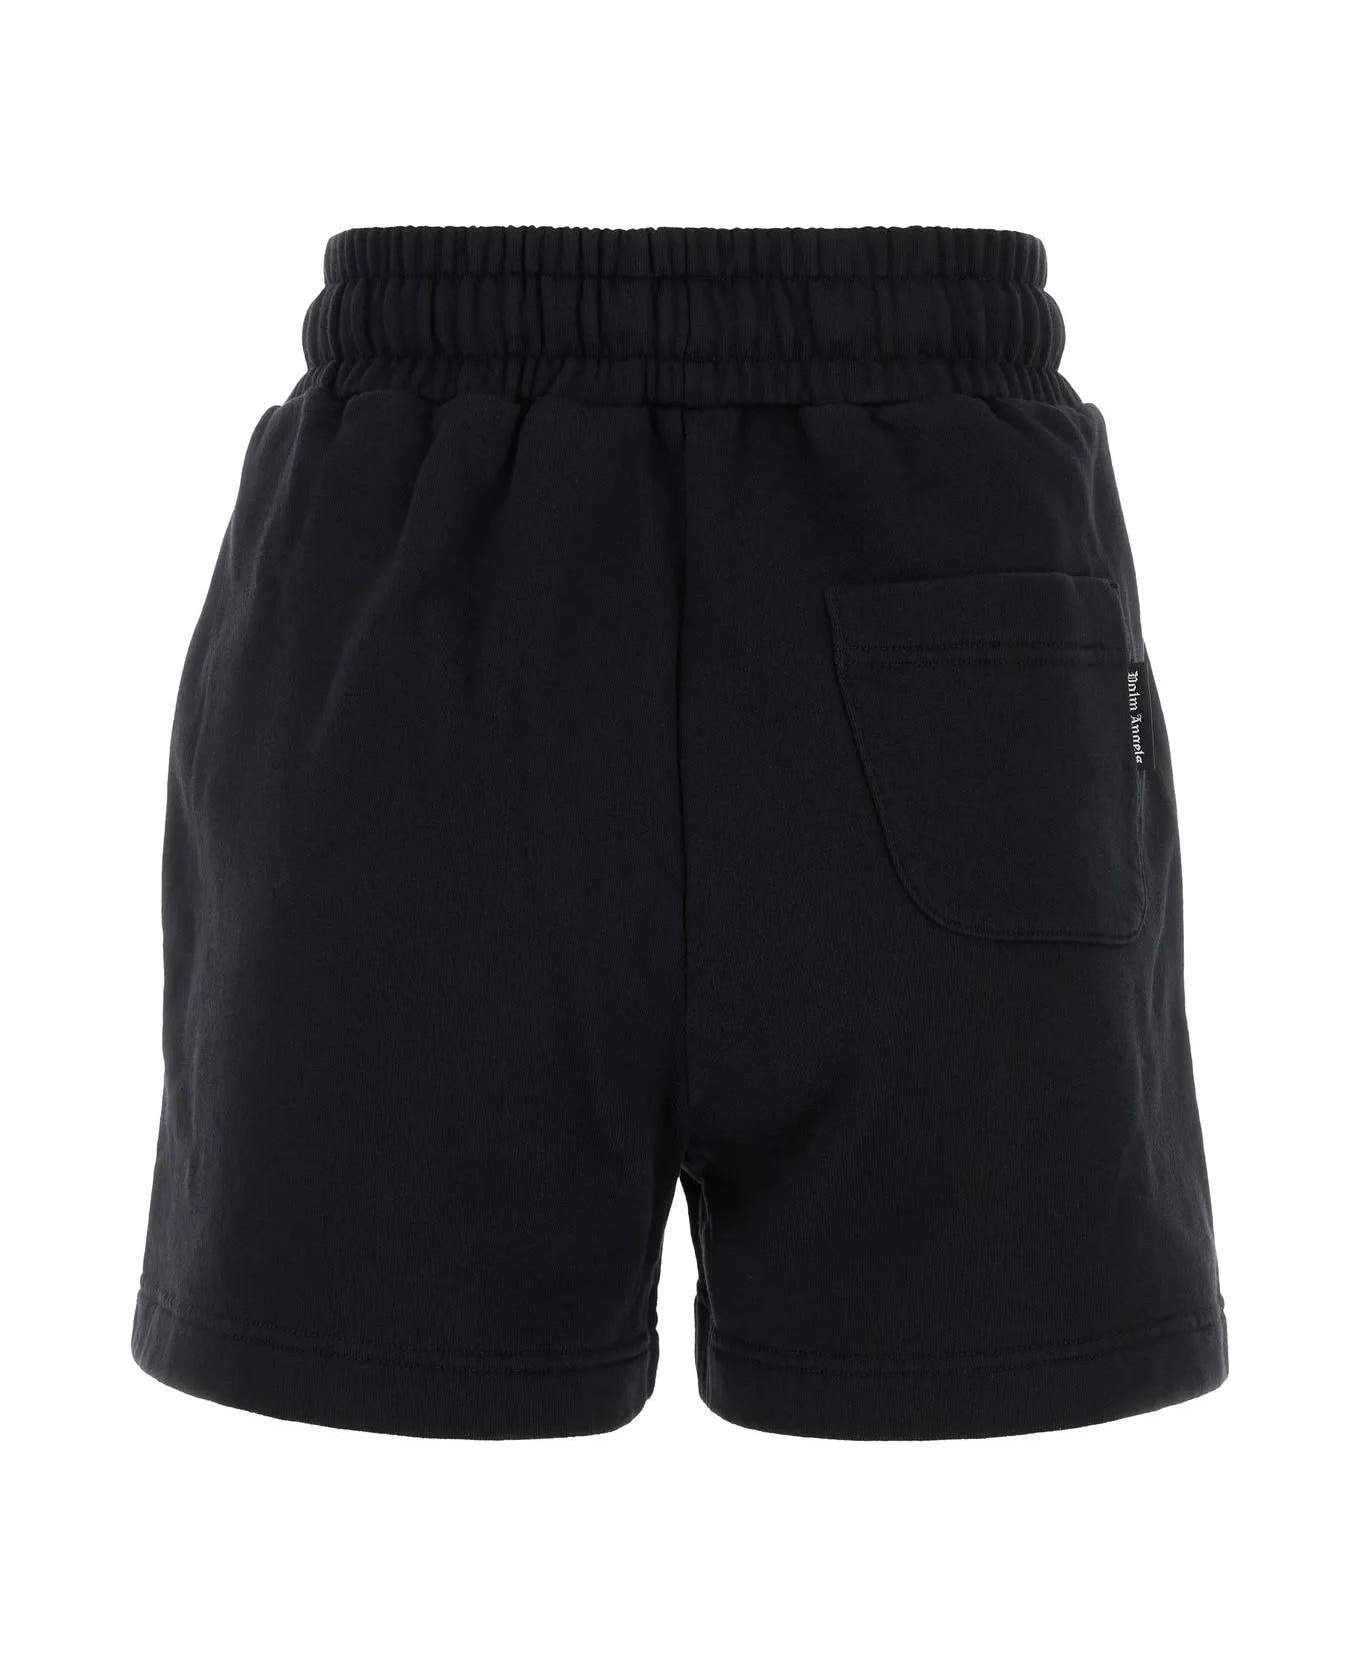 Palm Angels Black Cotton Shorts - Black Black